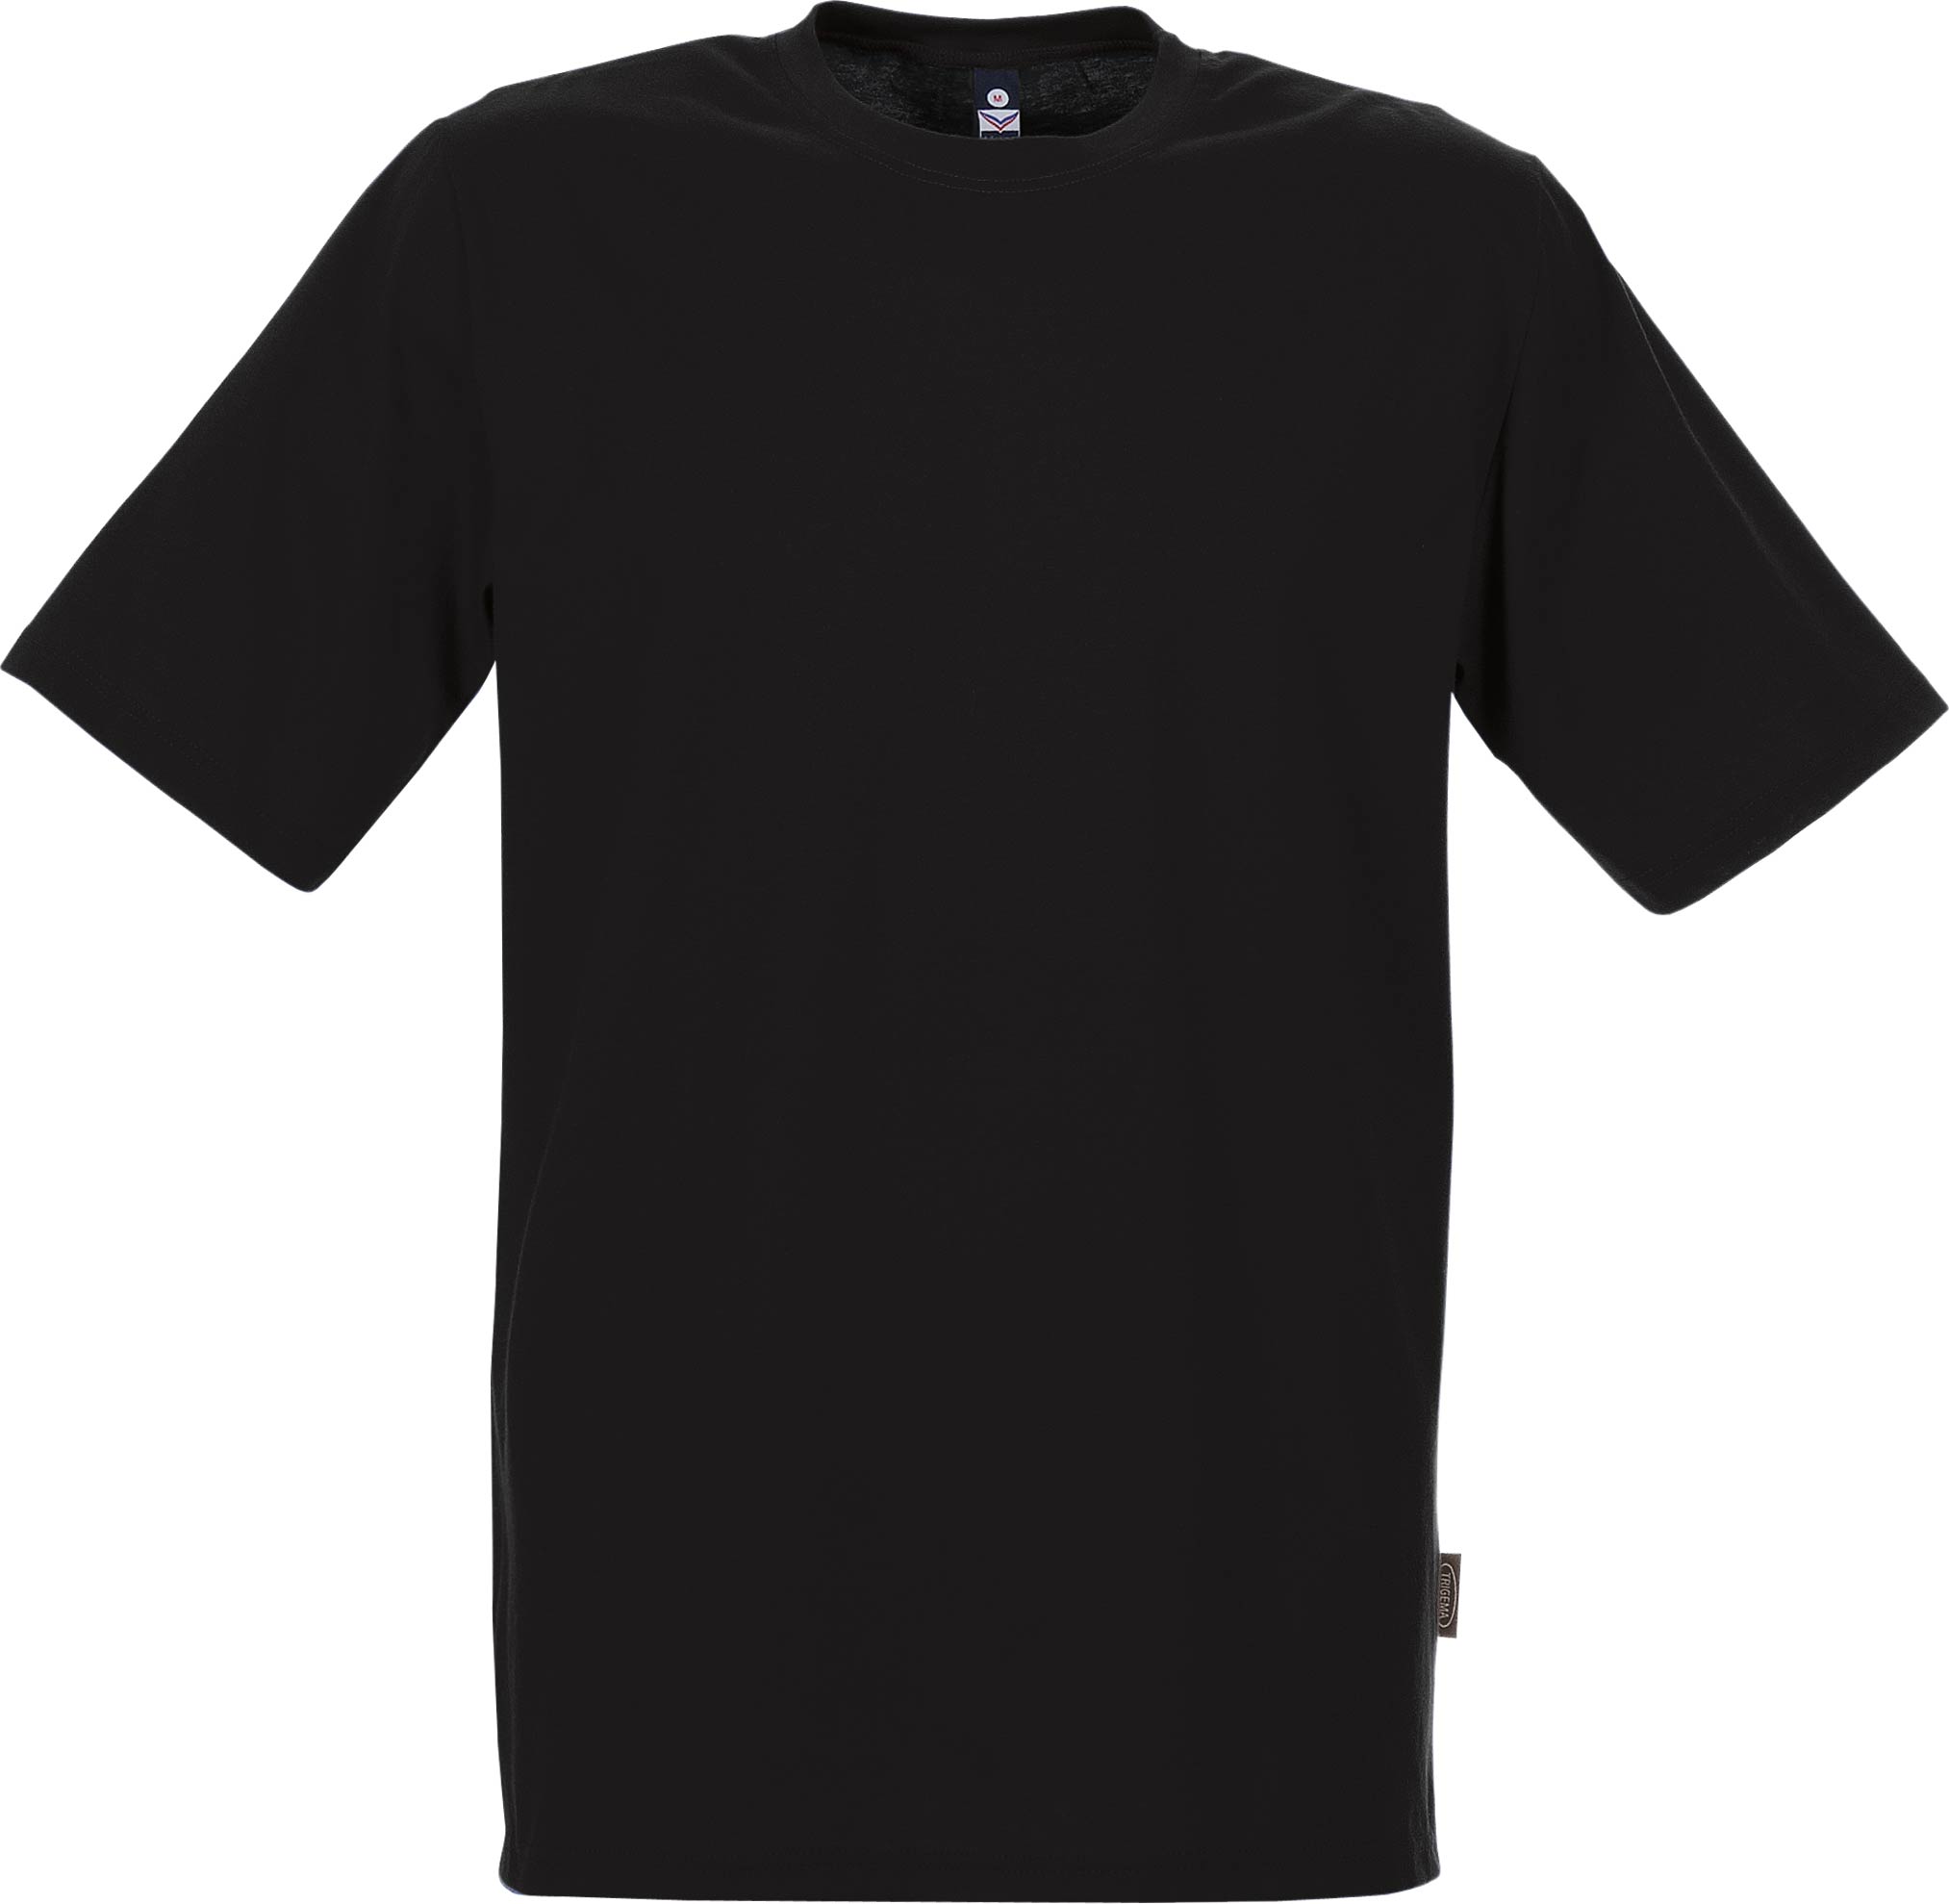 Schwarzes T-Shirt aus deutscher Produktion - Trigema T-Shirt | Sport-T-Shirts